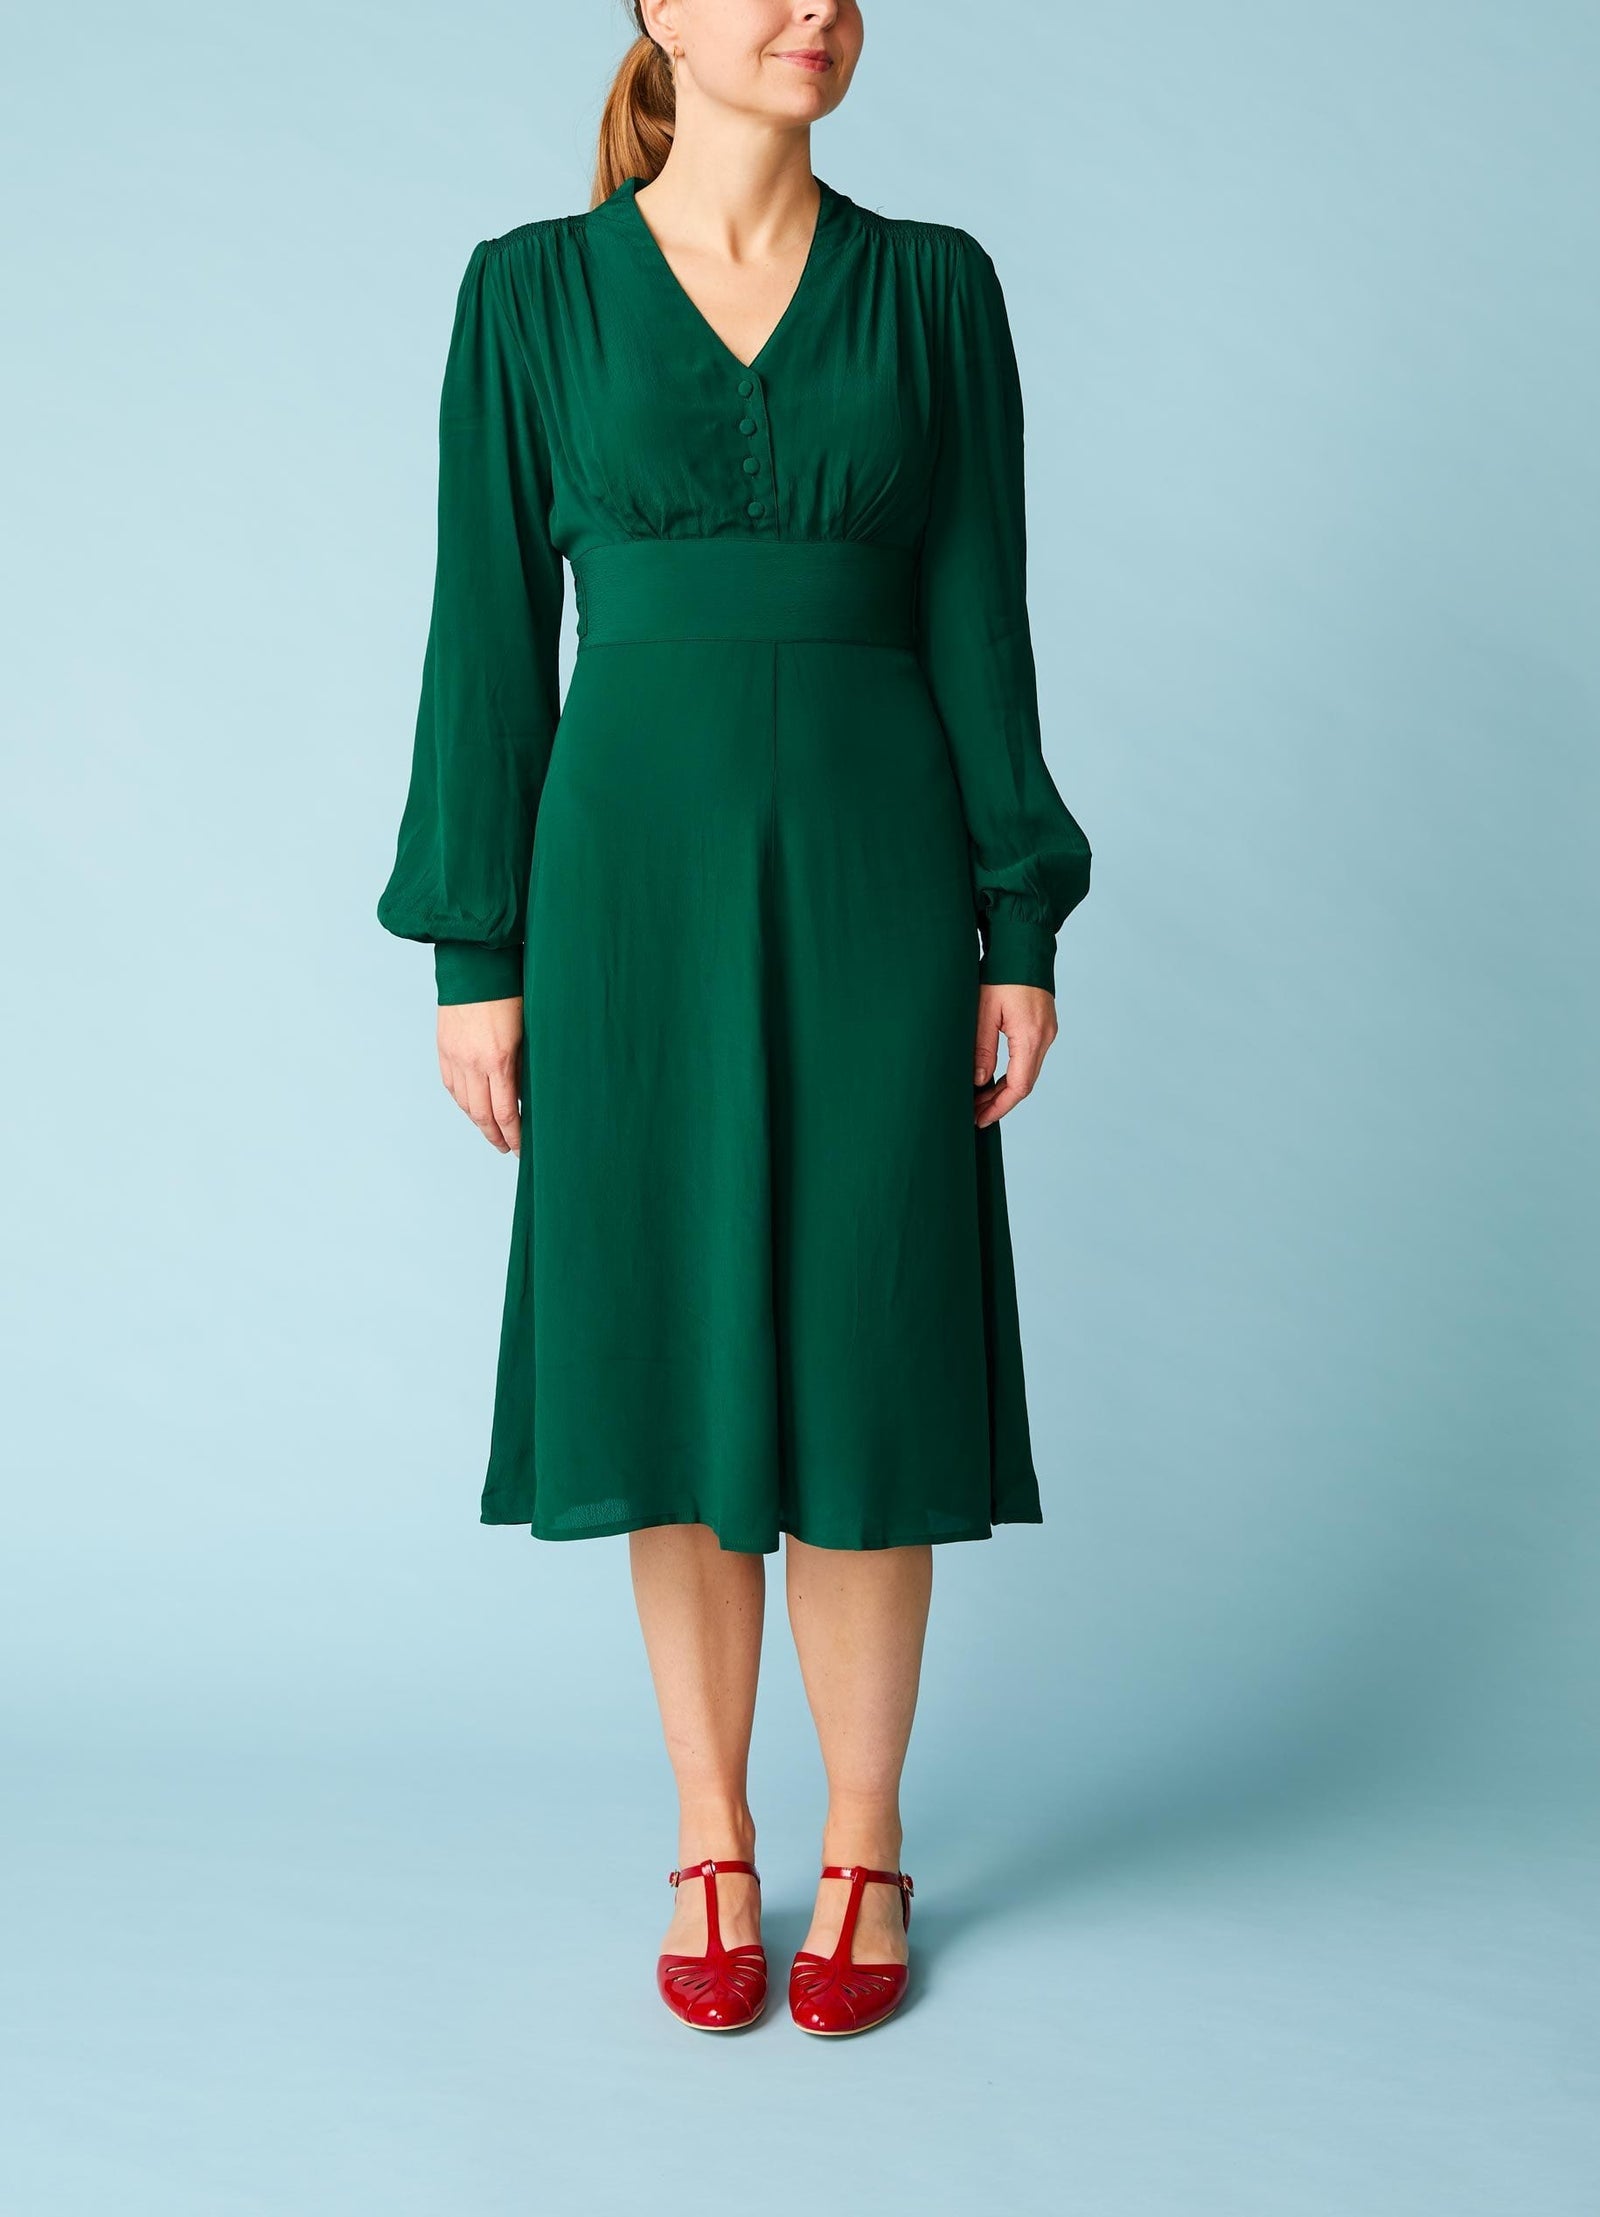 Inhaber Fragment Verfügbar lange grønne kjoler Arbitrage Sprecher